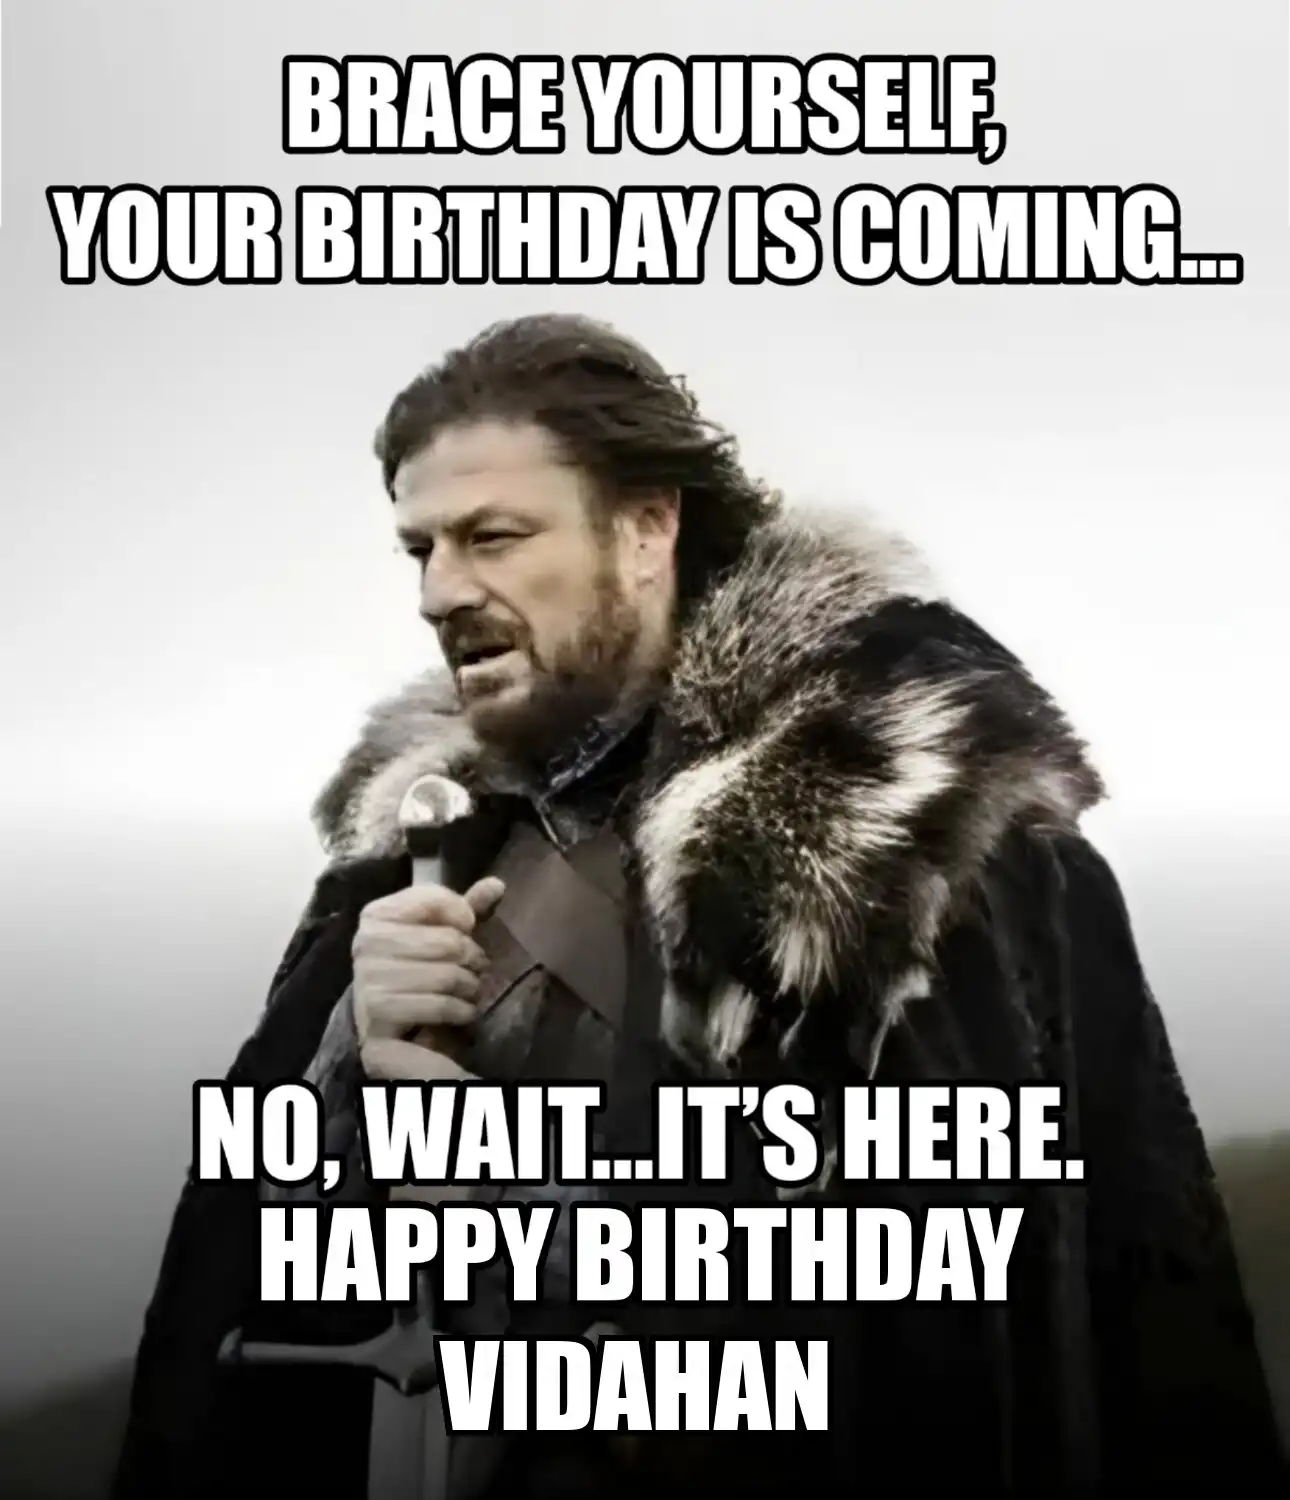 Happy Birthday Vidahan Brace Yourself Your Birthday Is Coming Meme